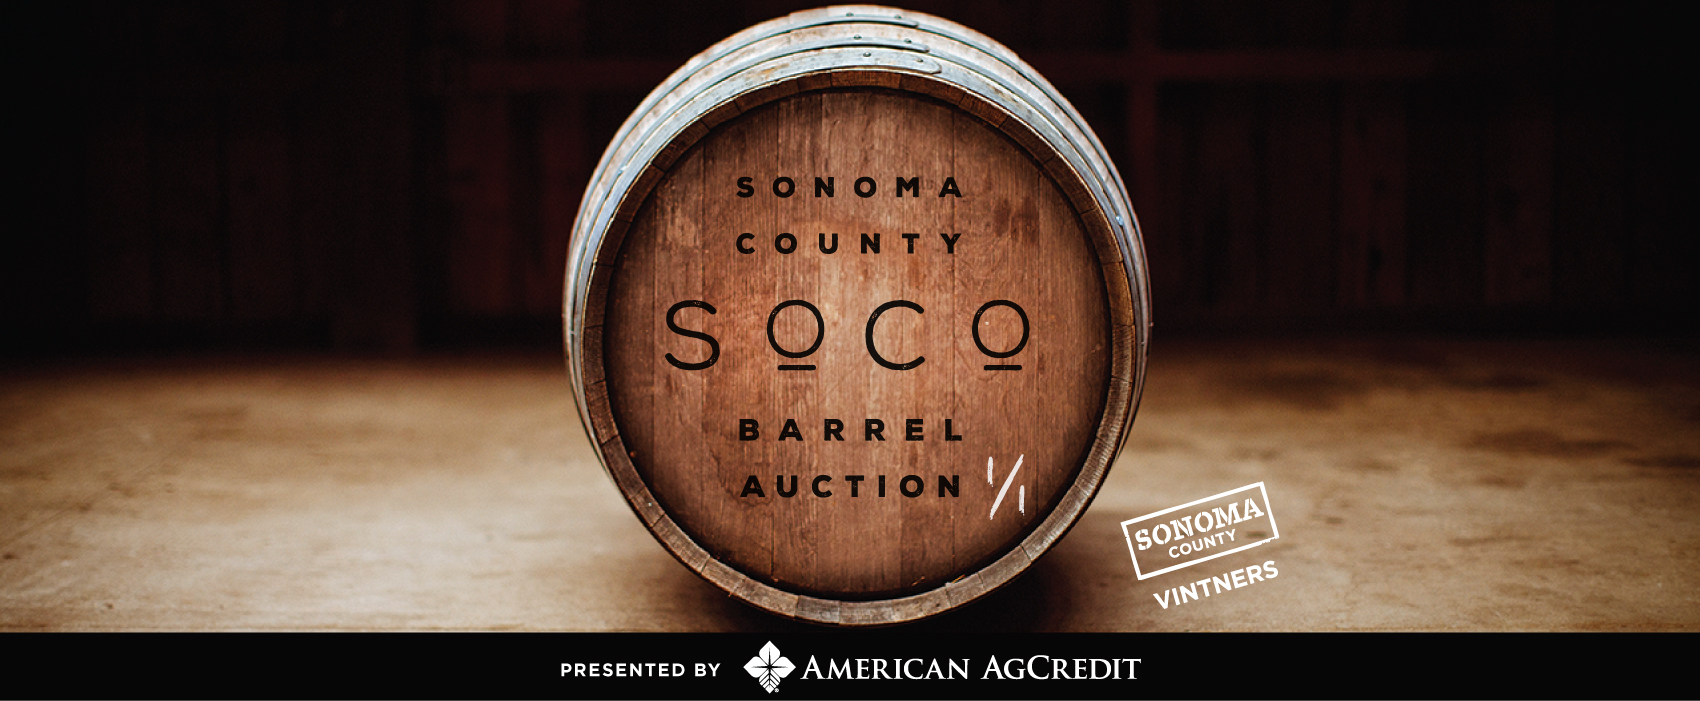 Sonoma County Barrel Auction